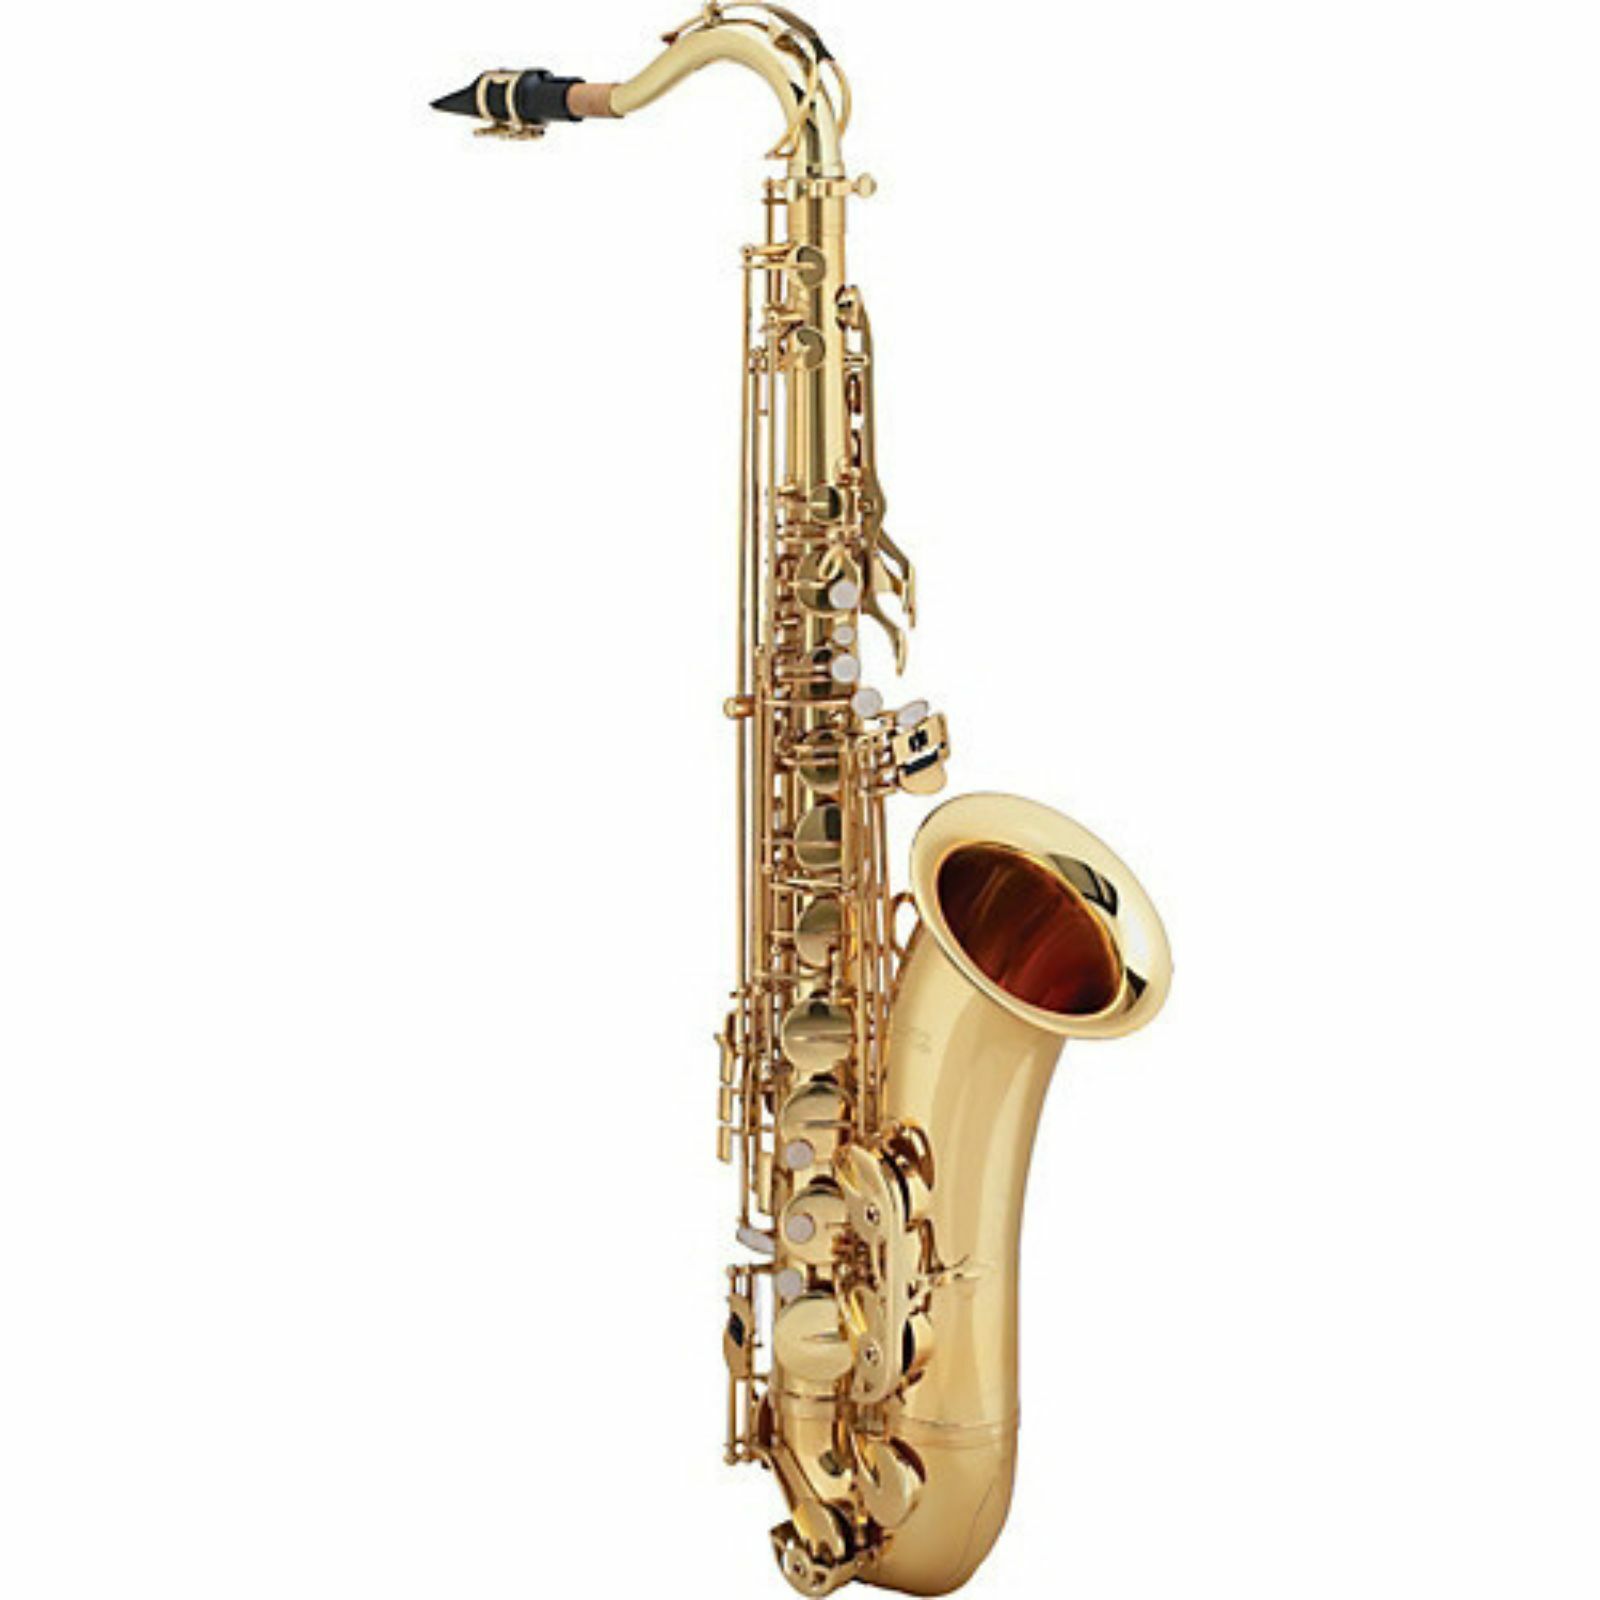 Tenor Saxophone for Sale - Best Value in Australia